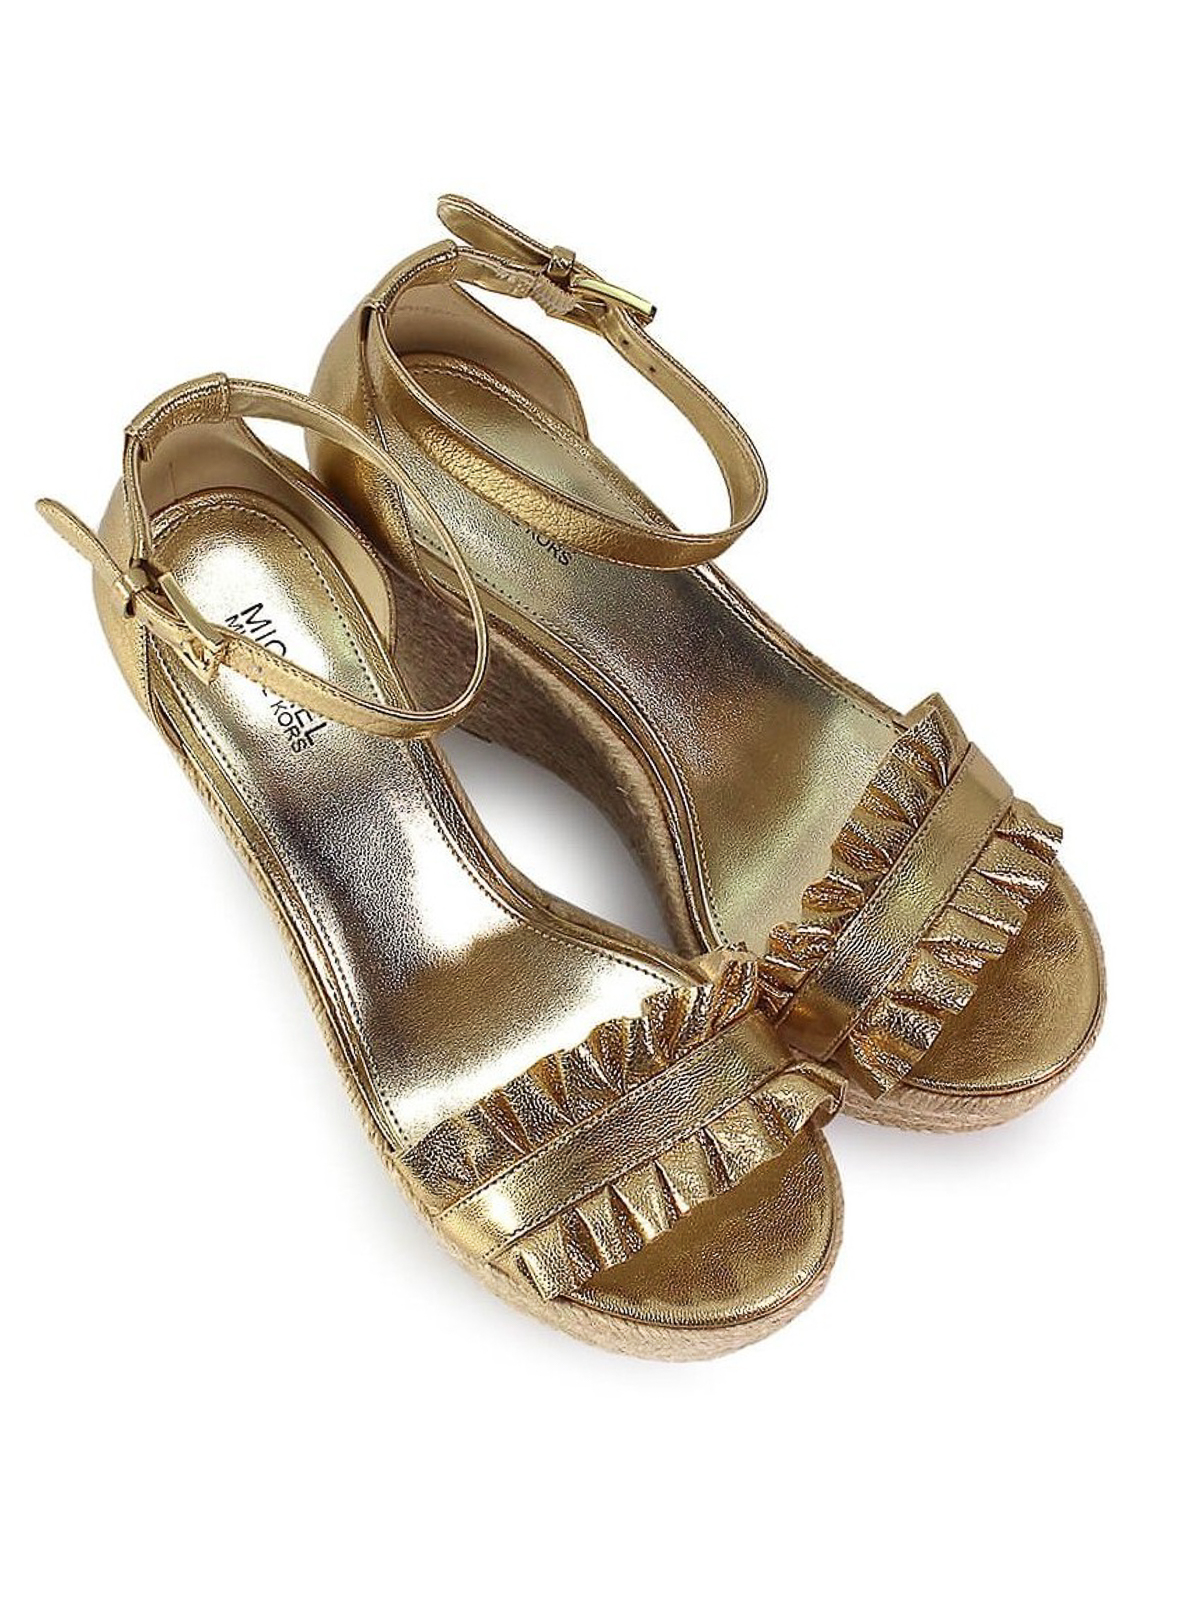 Bella golden wedge ruffle sandals 